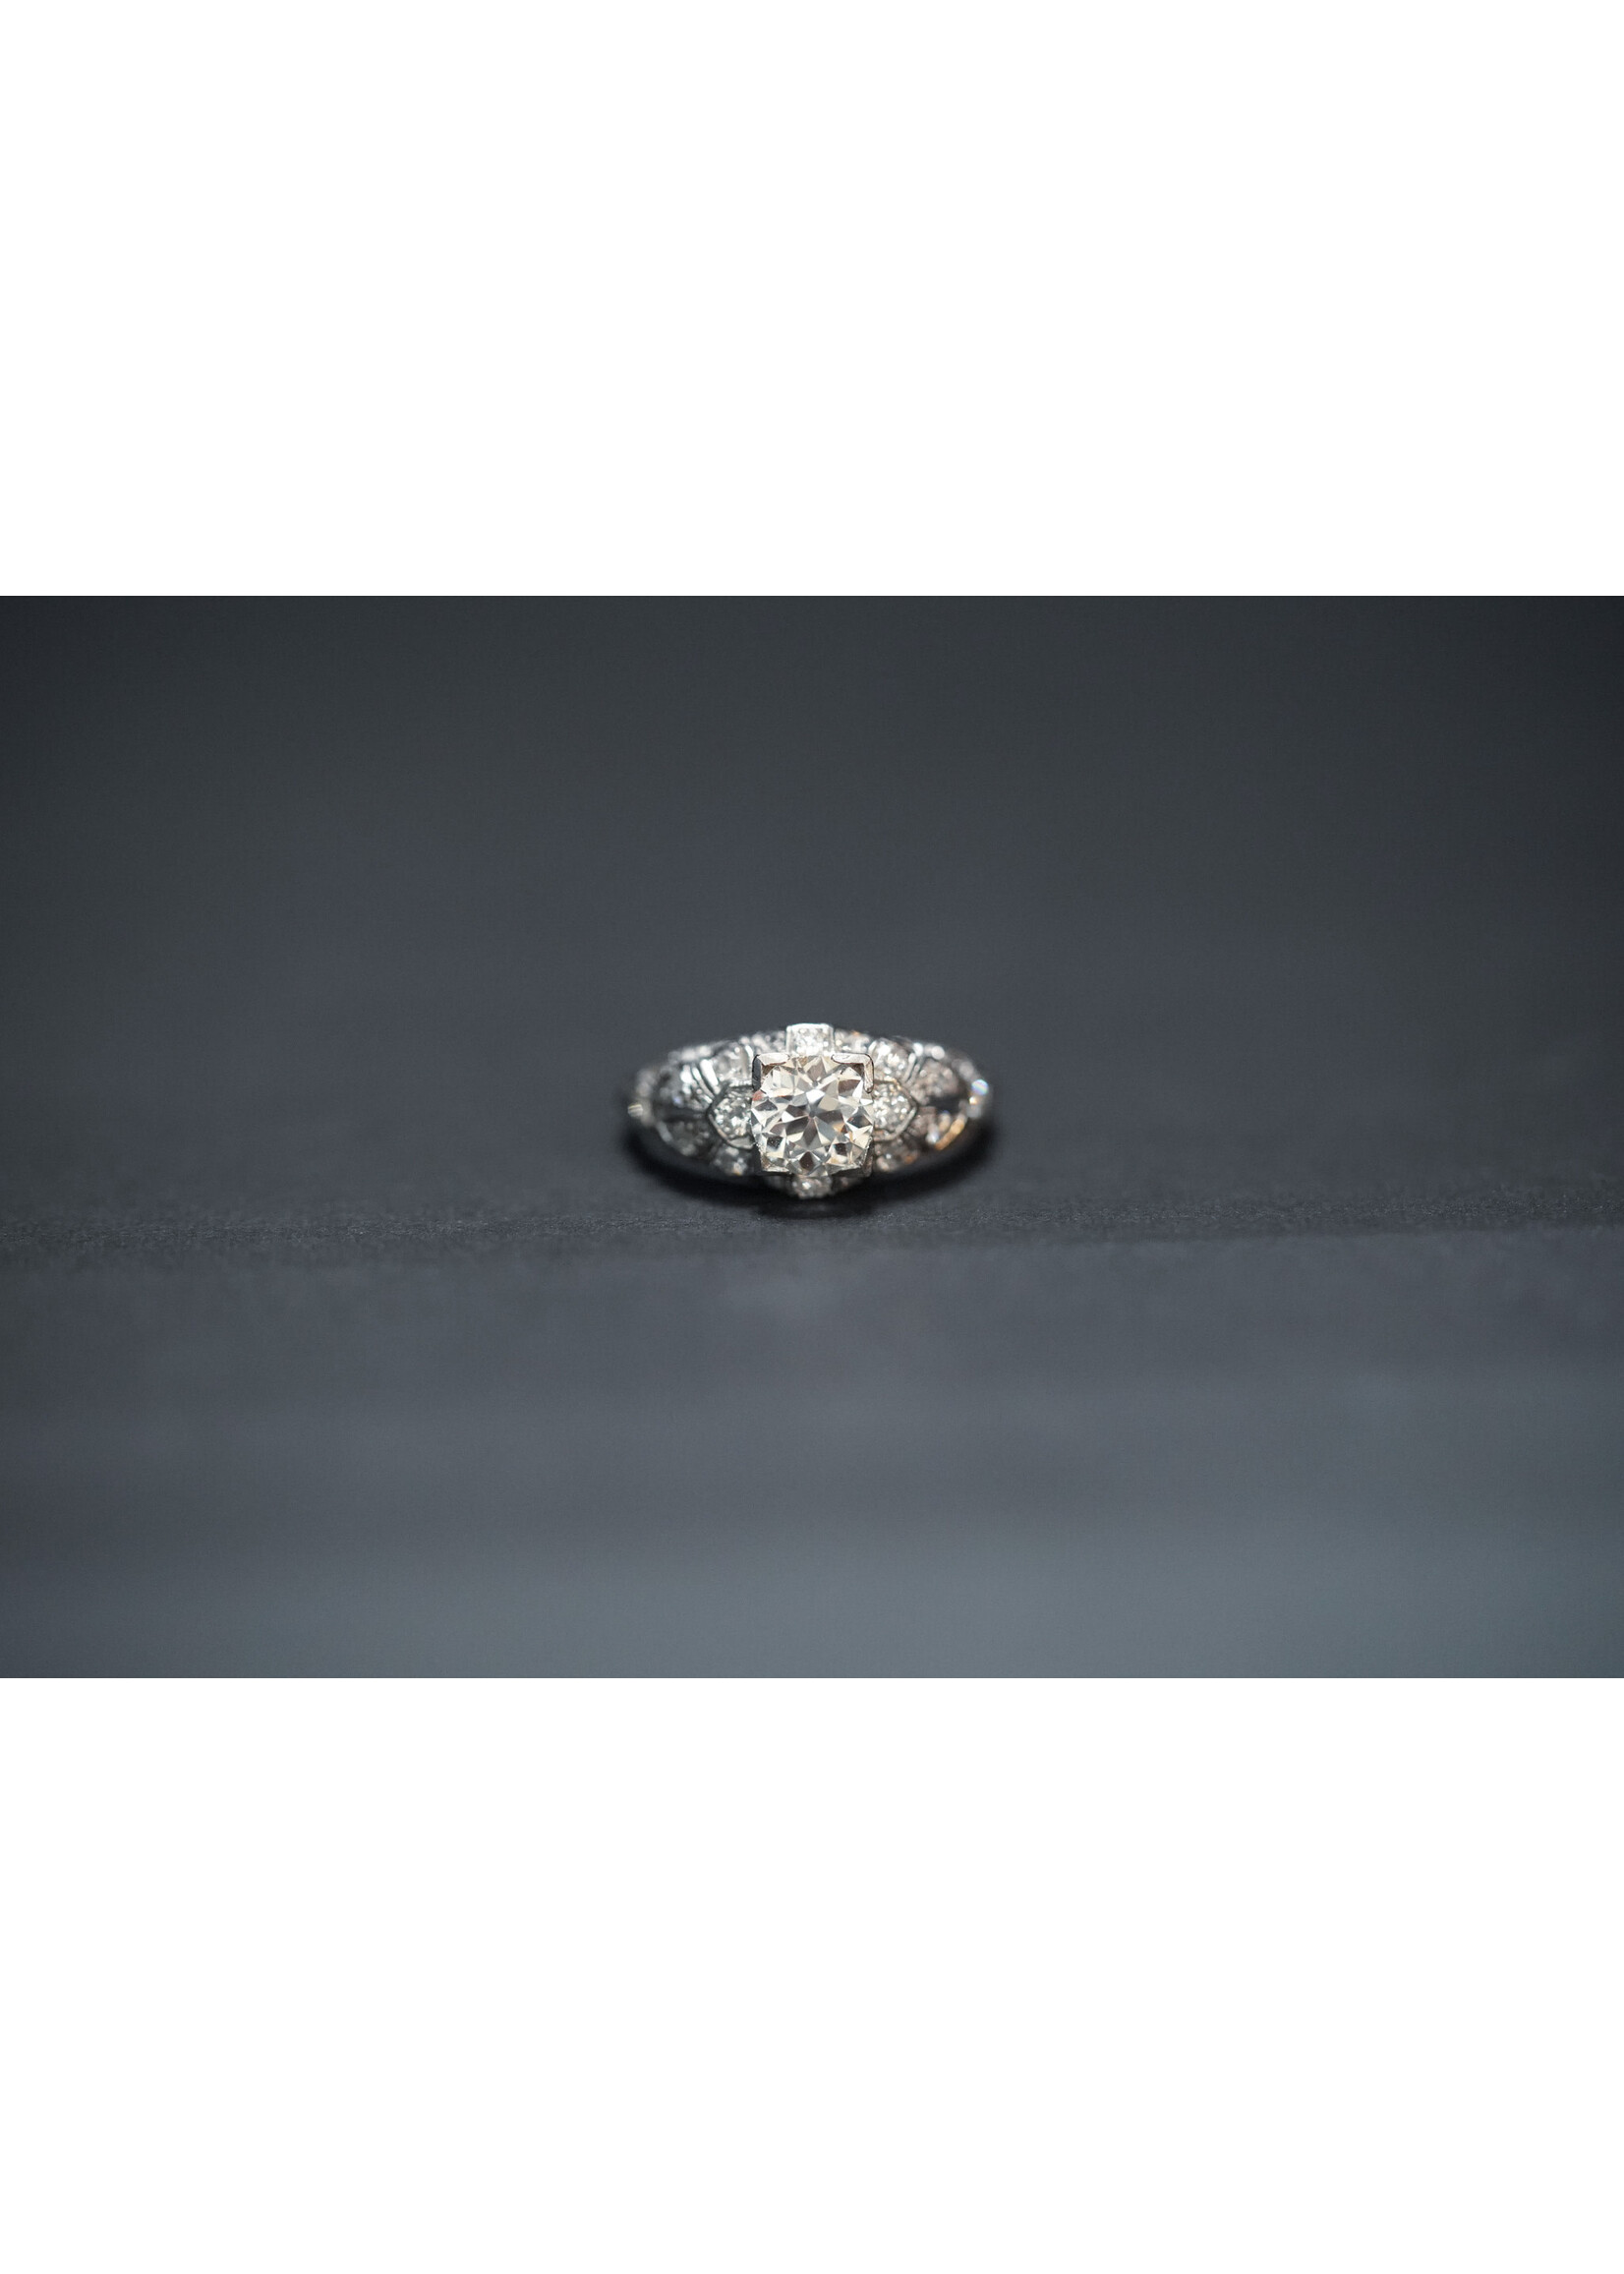 18KW 3.60g 1.30ctw (.97ctr) K/VS2 European Cut Diamond Vintage Ring (size 6.5)